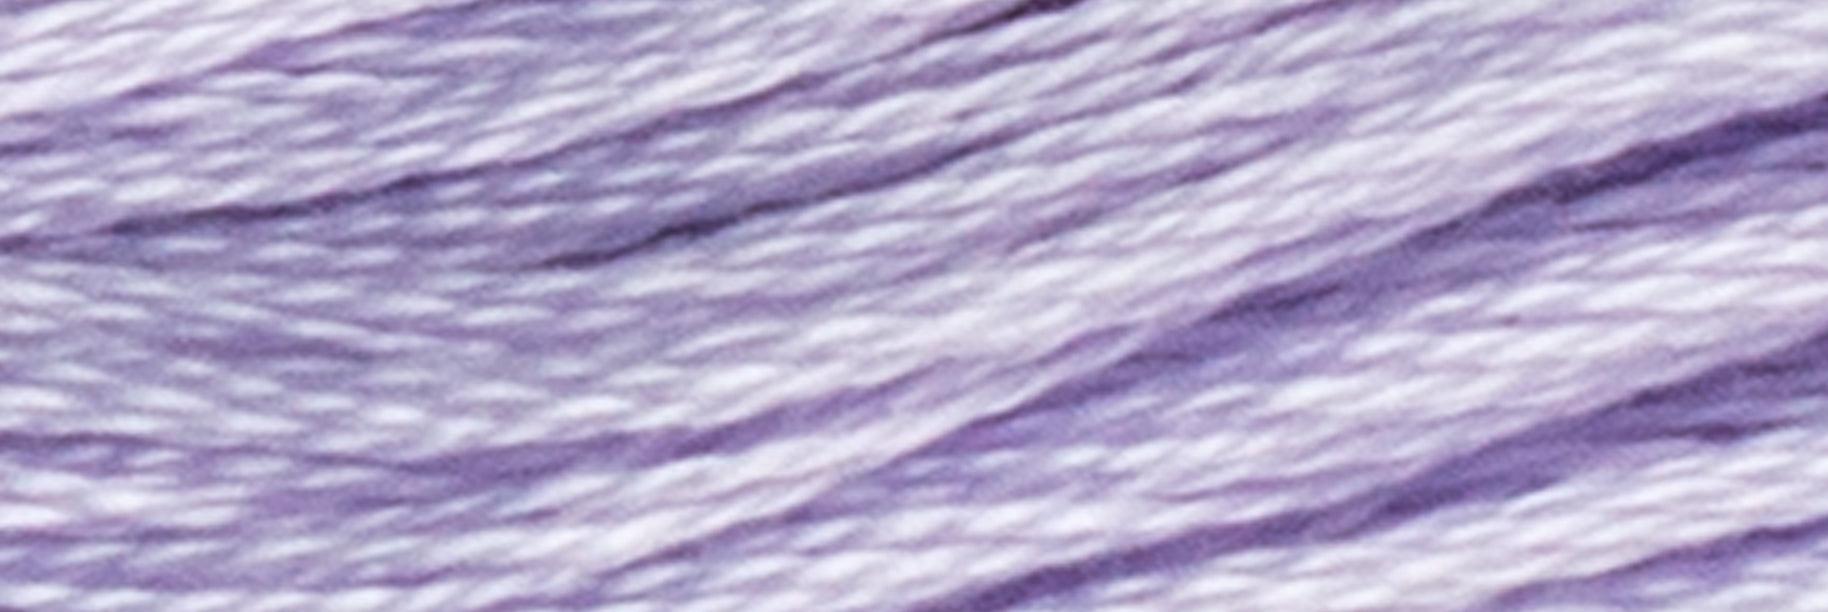 Stranded Cotton Luca-S - 102 / DMC 26 / Anchor 342 - Luca-S Stranded Cotton